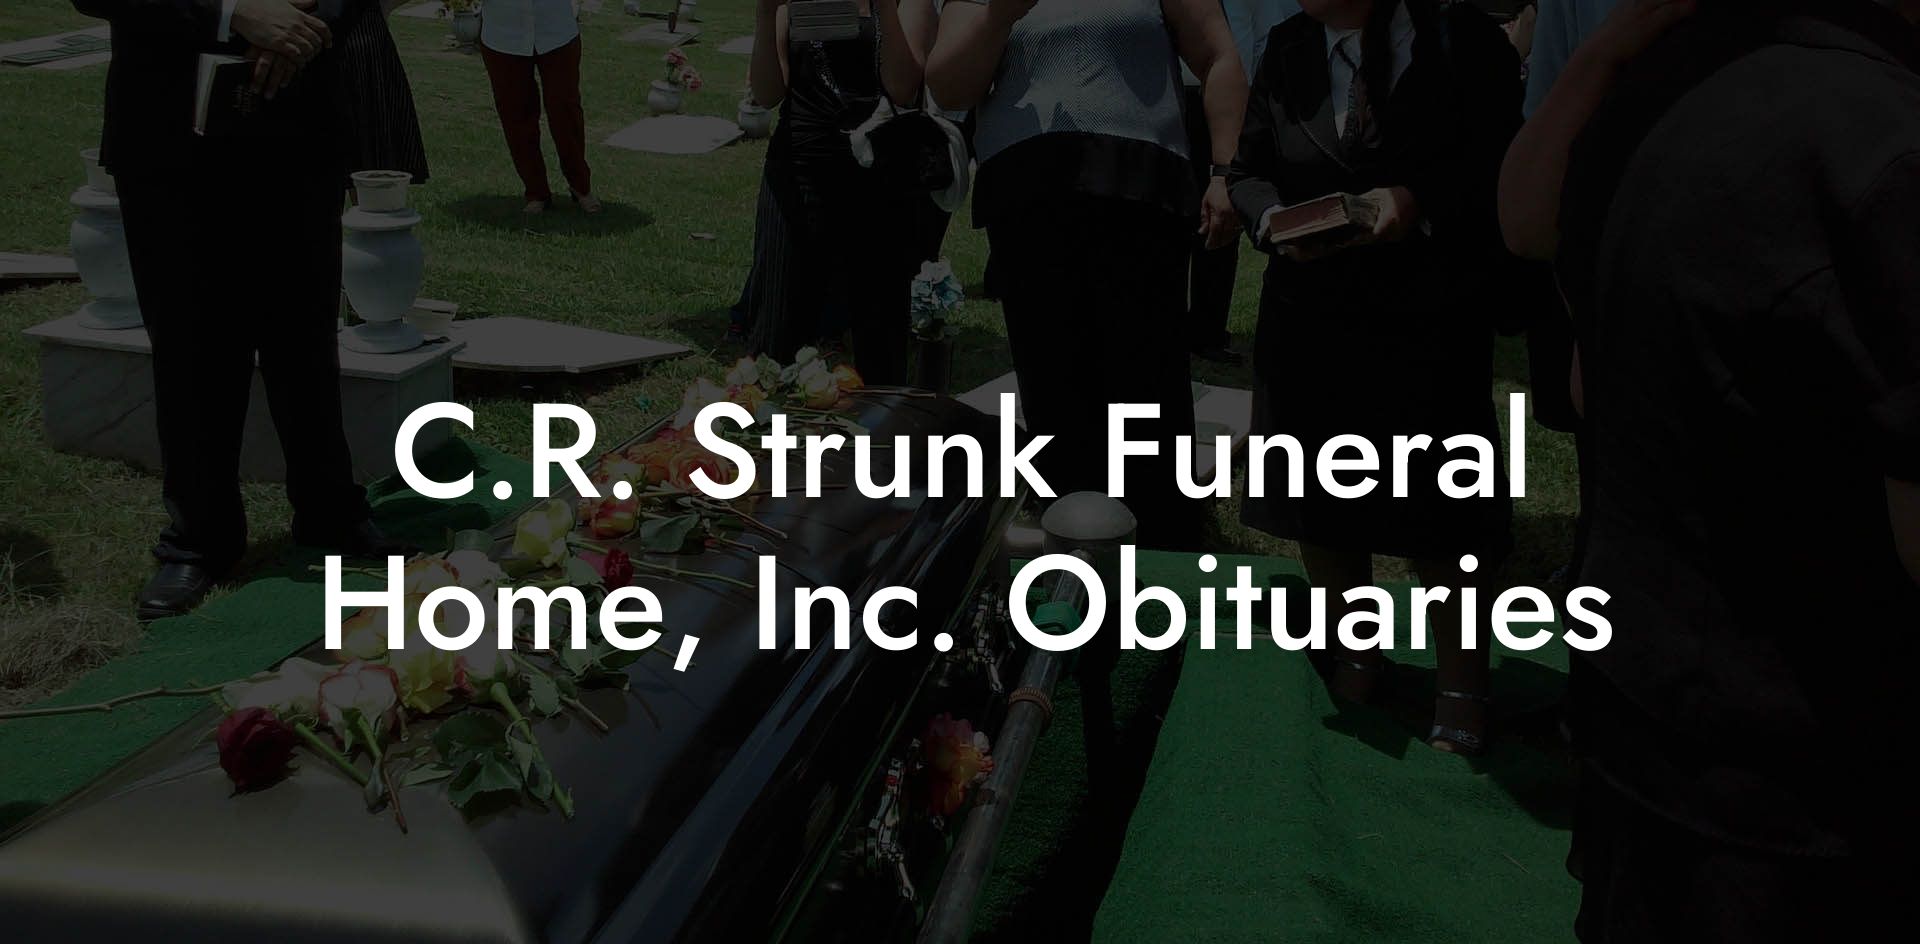 C.R. Strunk Funeral Home, Inc. Obituaries